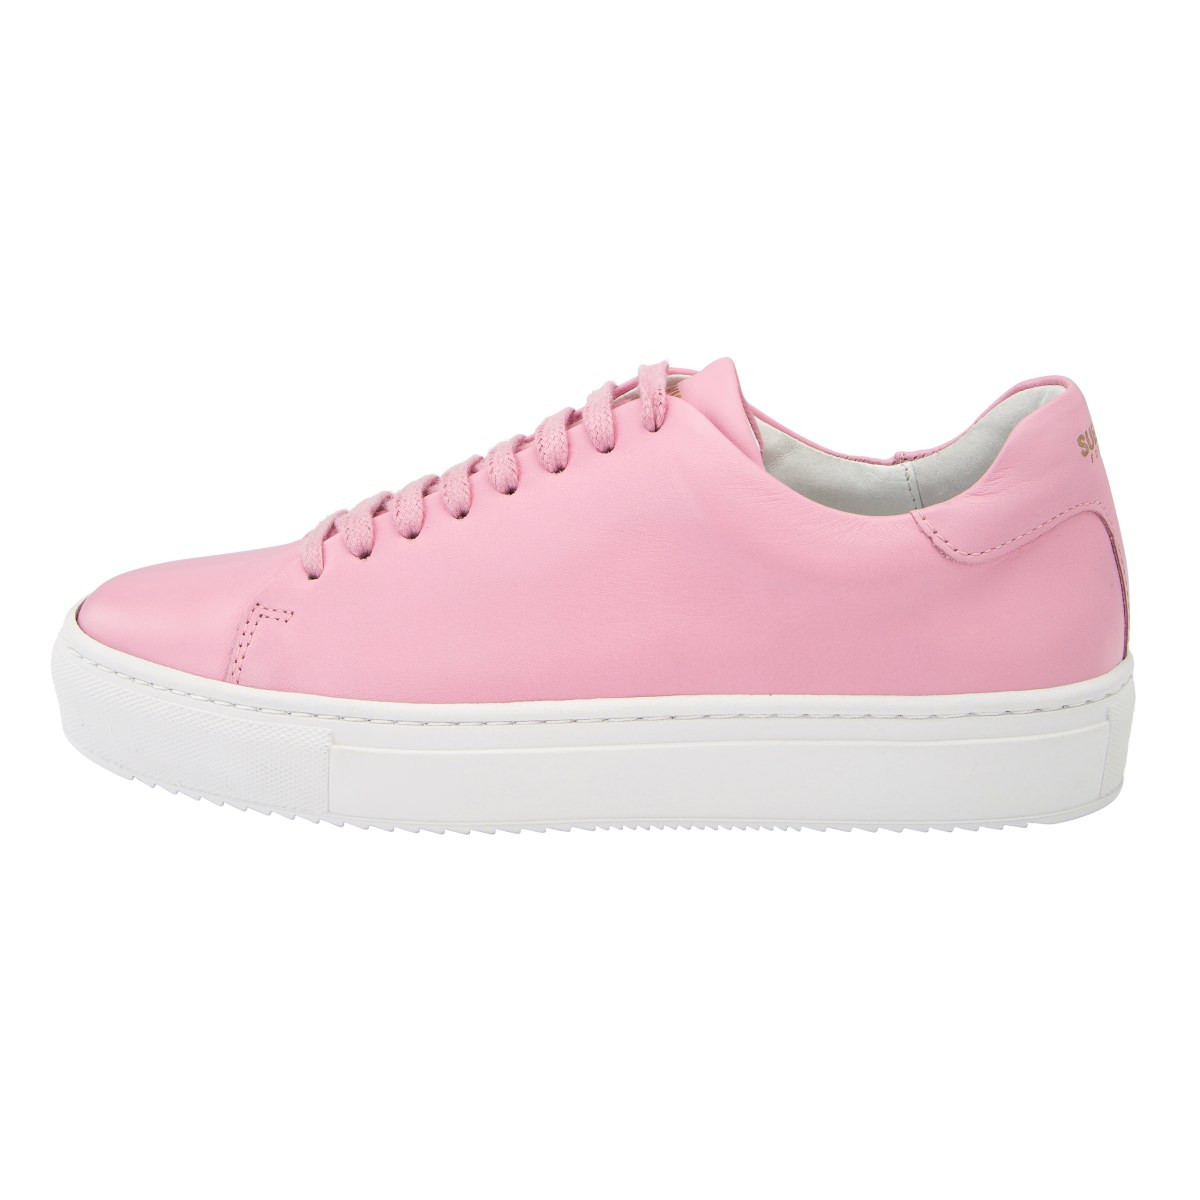 Suedwind-Ashton-Leather-Leder-Sneaker-Schuhe-Boots-Pink-10170027-01_1280x1280